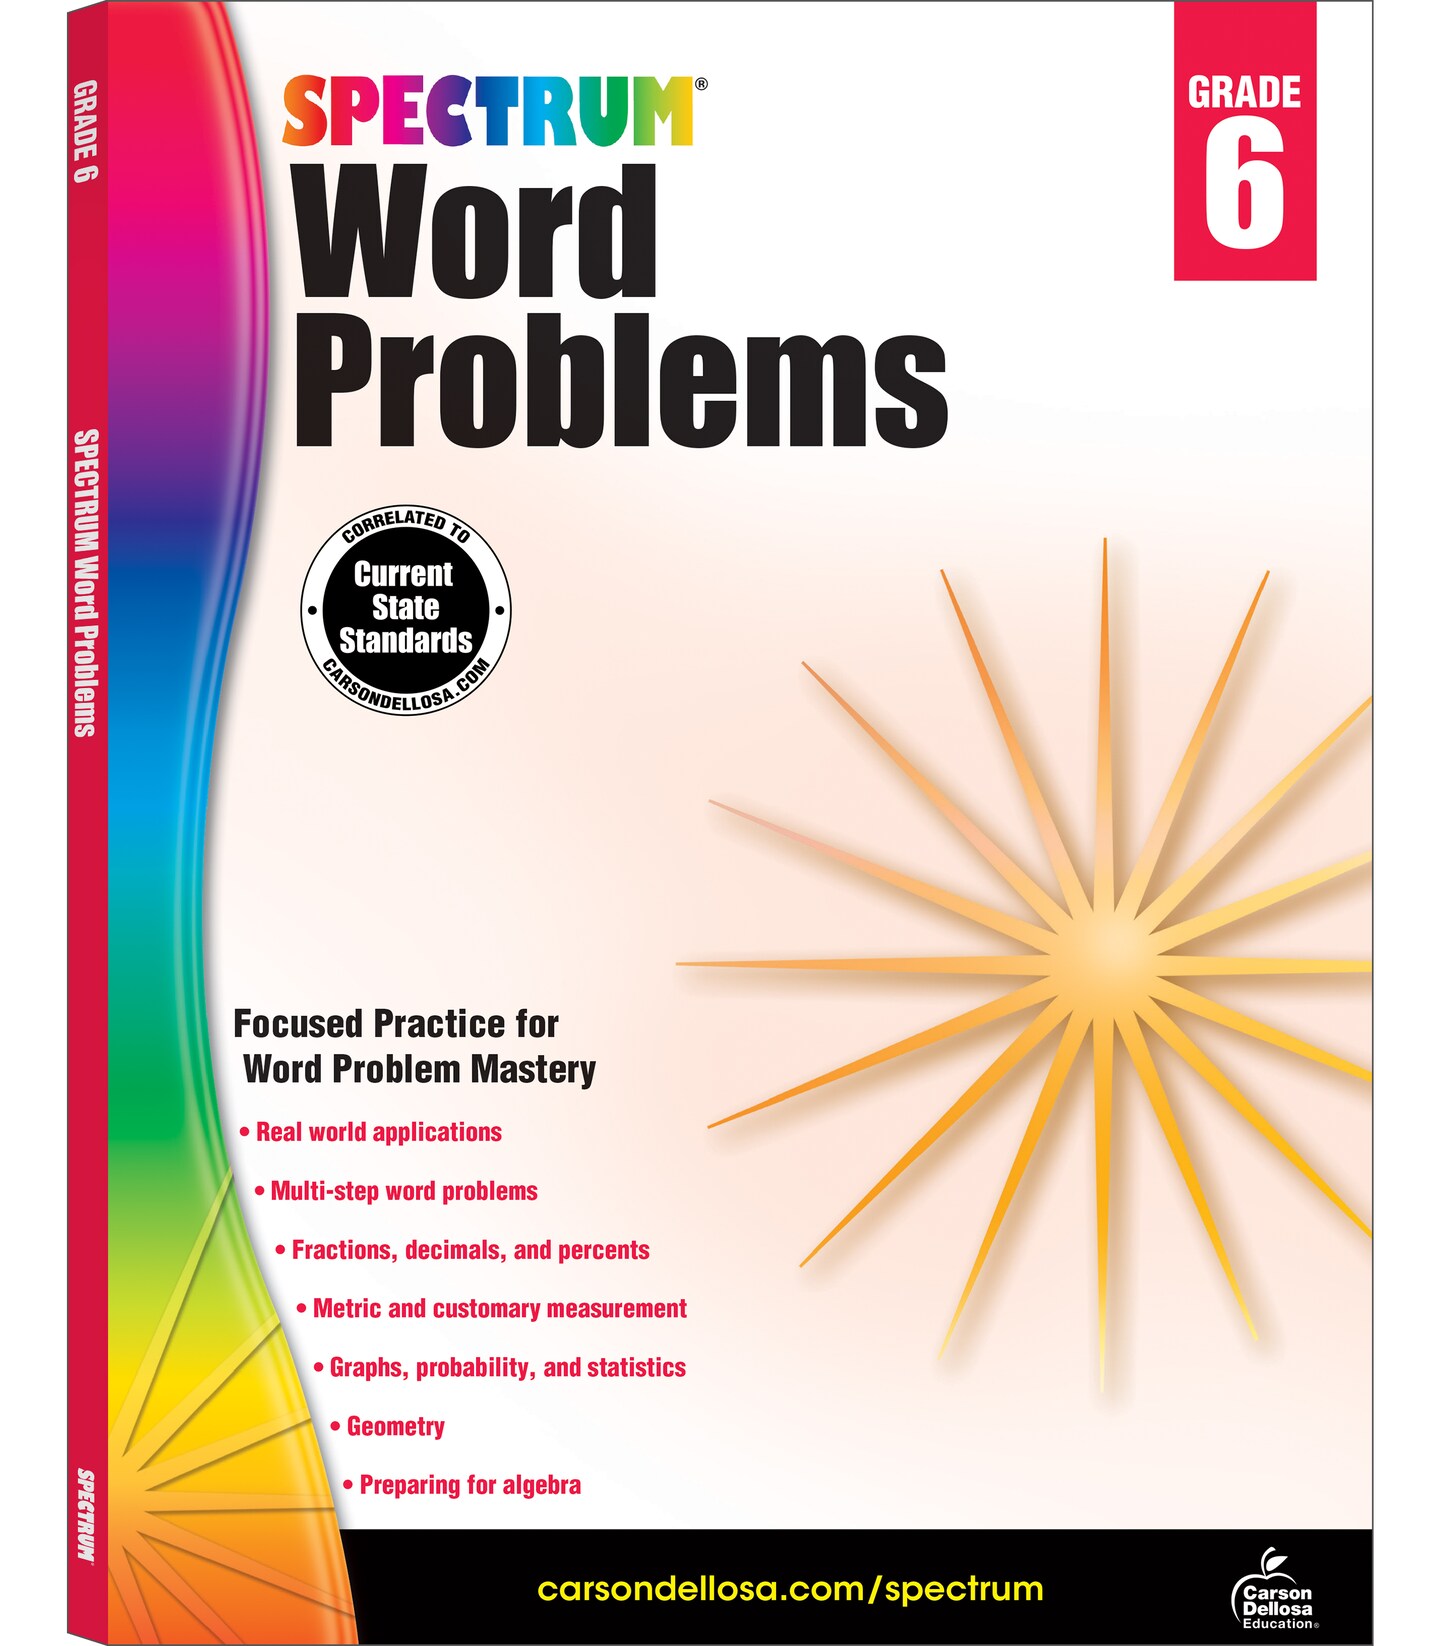 Spectrum Grade 6 Word Problems Math Workbook, Ages 11-12, 6th Grade Math Word Problems Covering Fractions, Decimals, Geometry, and Algebra 1 Prep, 6th Grade Math Word Problems Workbook for Kids